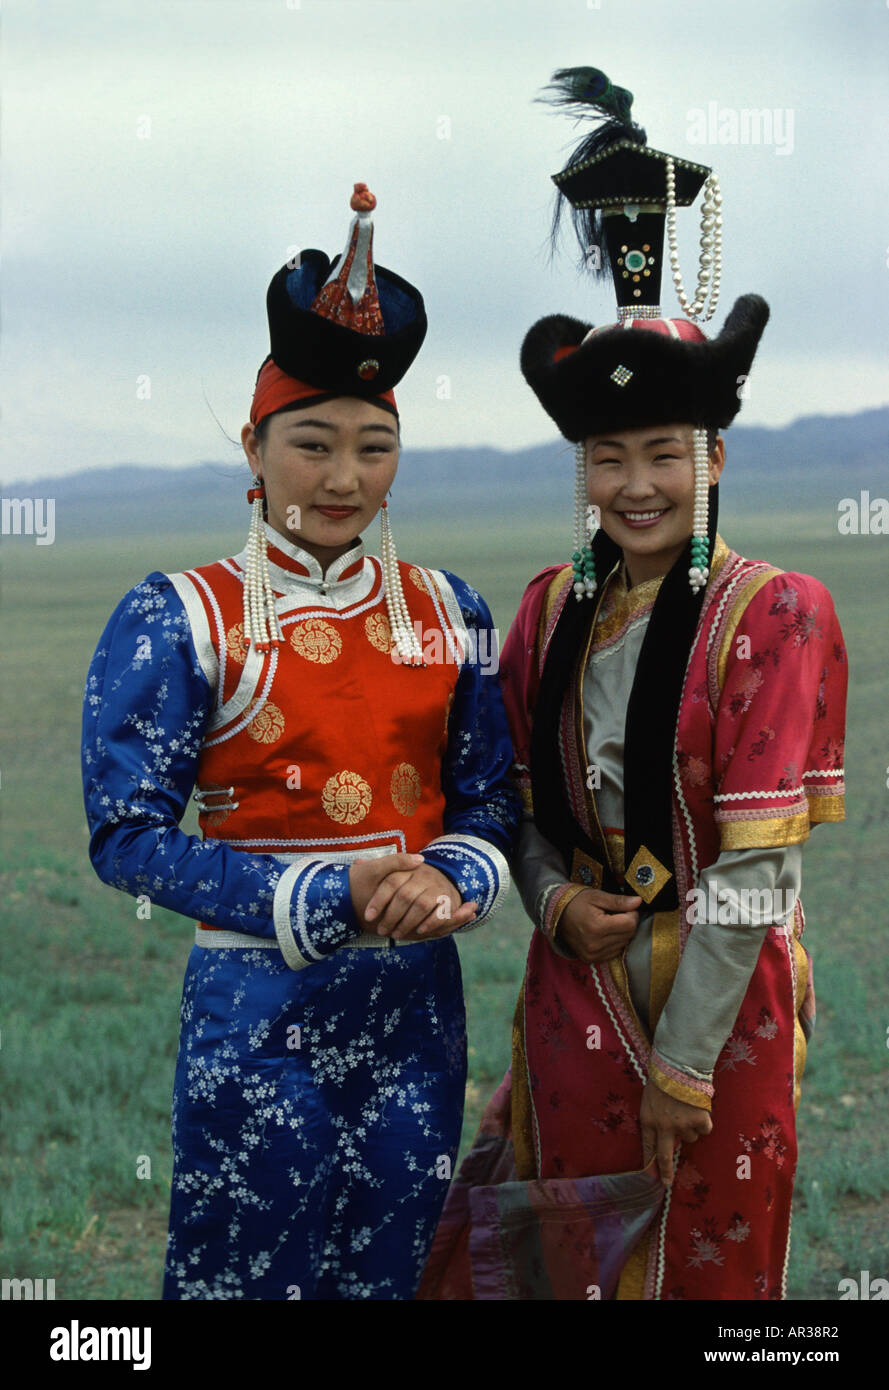 Traditional costumes, Gobi desert, Mongolia Asia Stock Photo